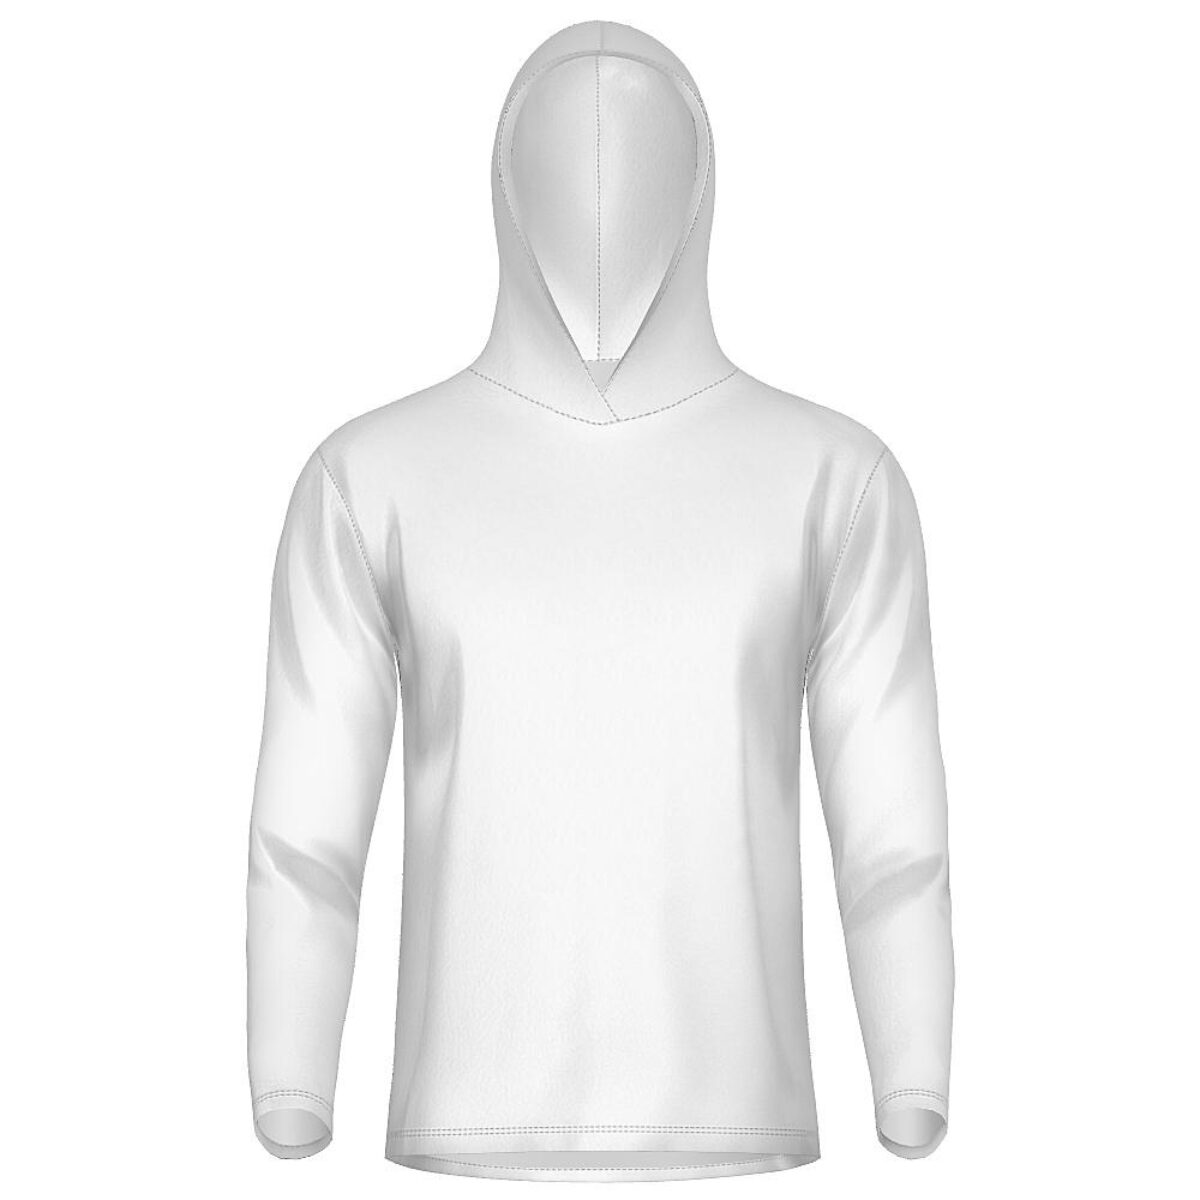 Sublimation Ready Vapor Adult Basic Hoodie Sweatshirt - Ash Heather - 4568L